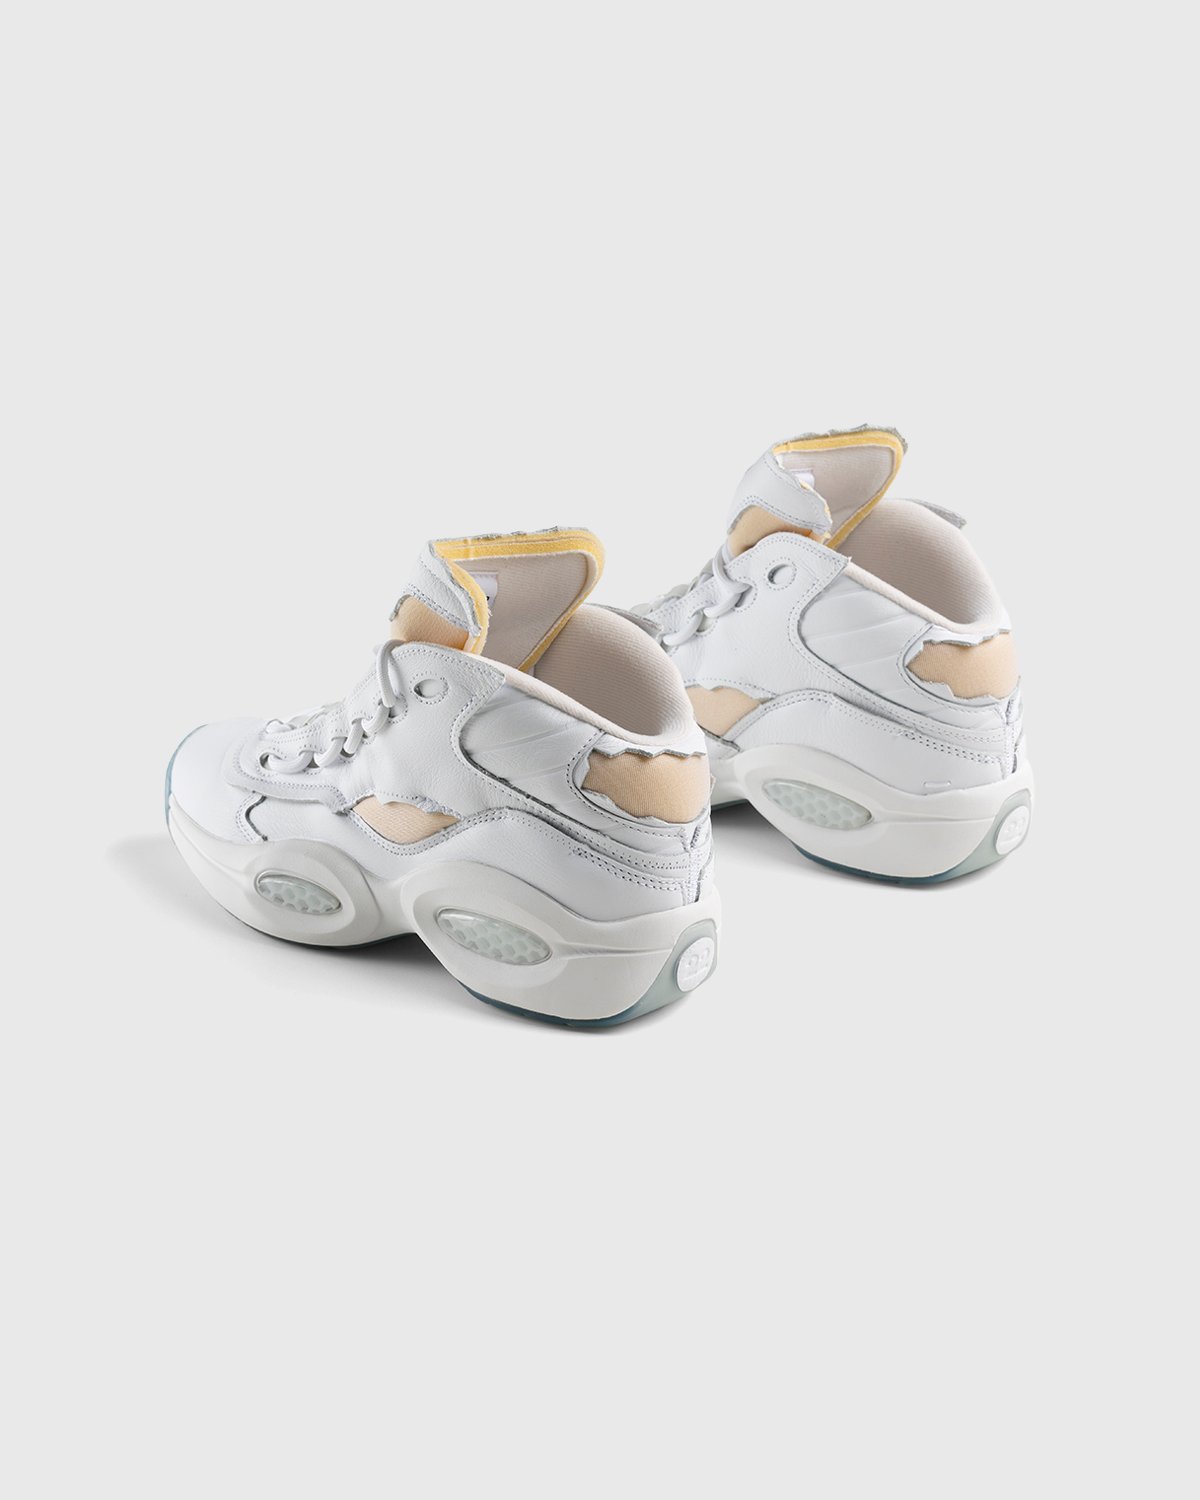 Reebok x Maison Margiela - Question Mid Memory Of White - Footwear - White - Image 3